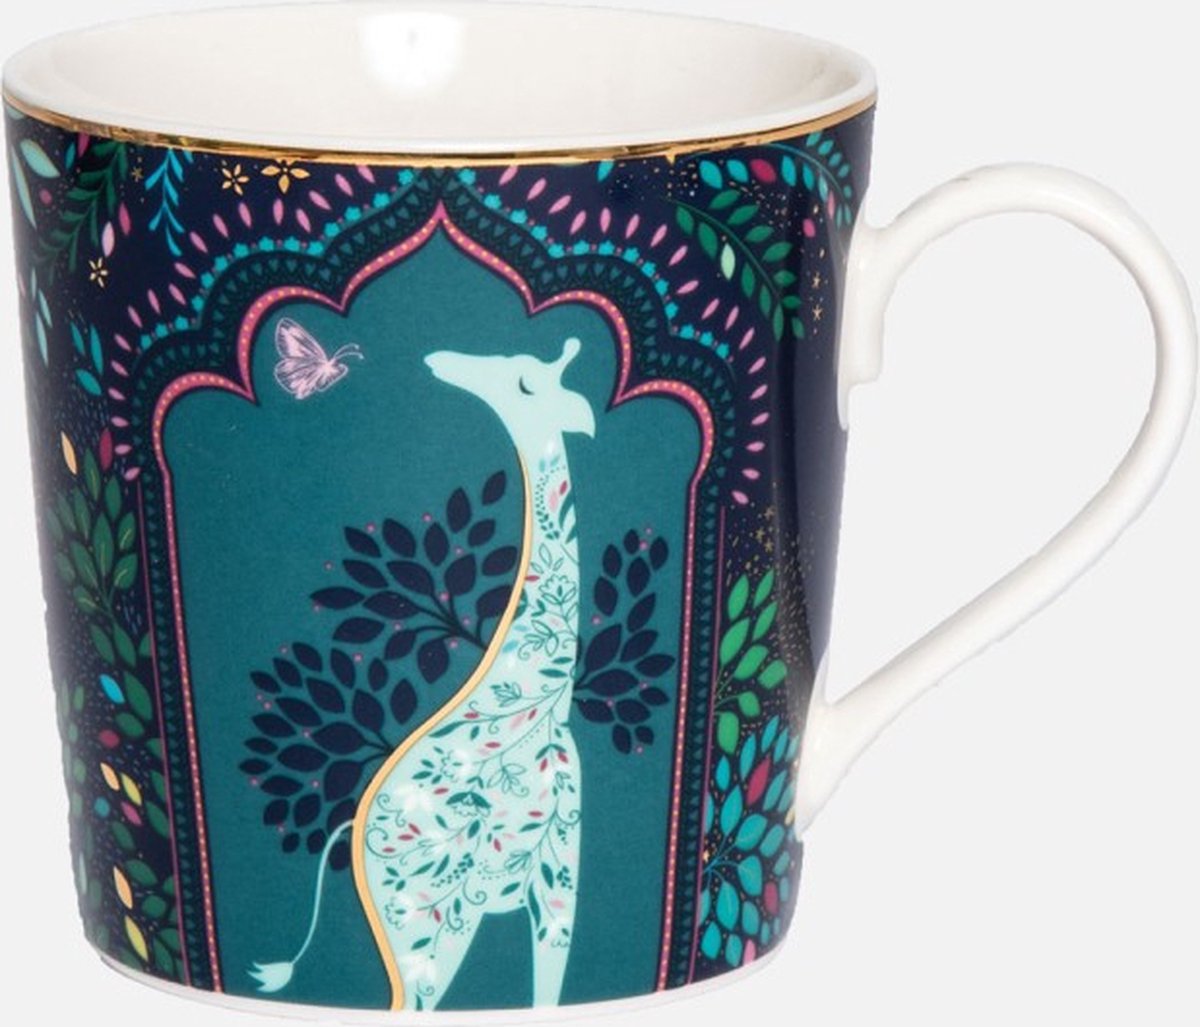 Sara Miller London - India Mug Midnight - Mok - Giraffe - Ø 9,8 cm, H 10,6 cm, 0,34 l